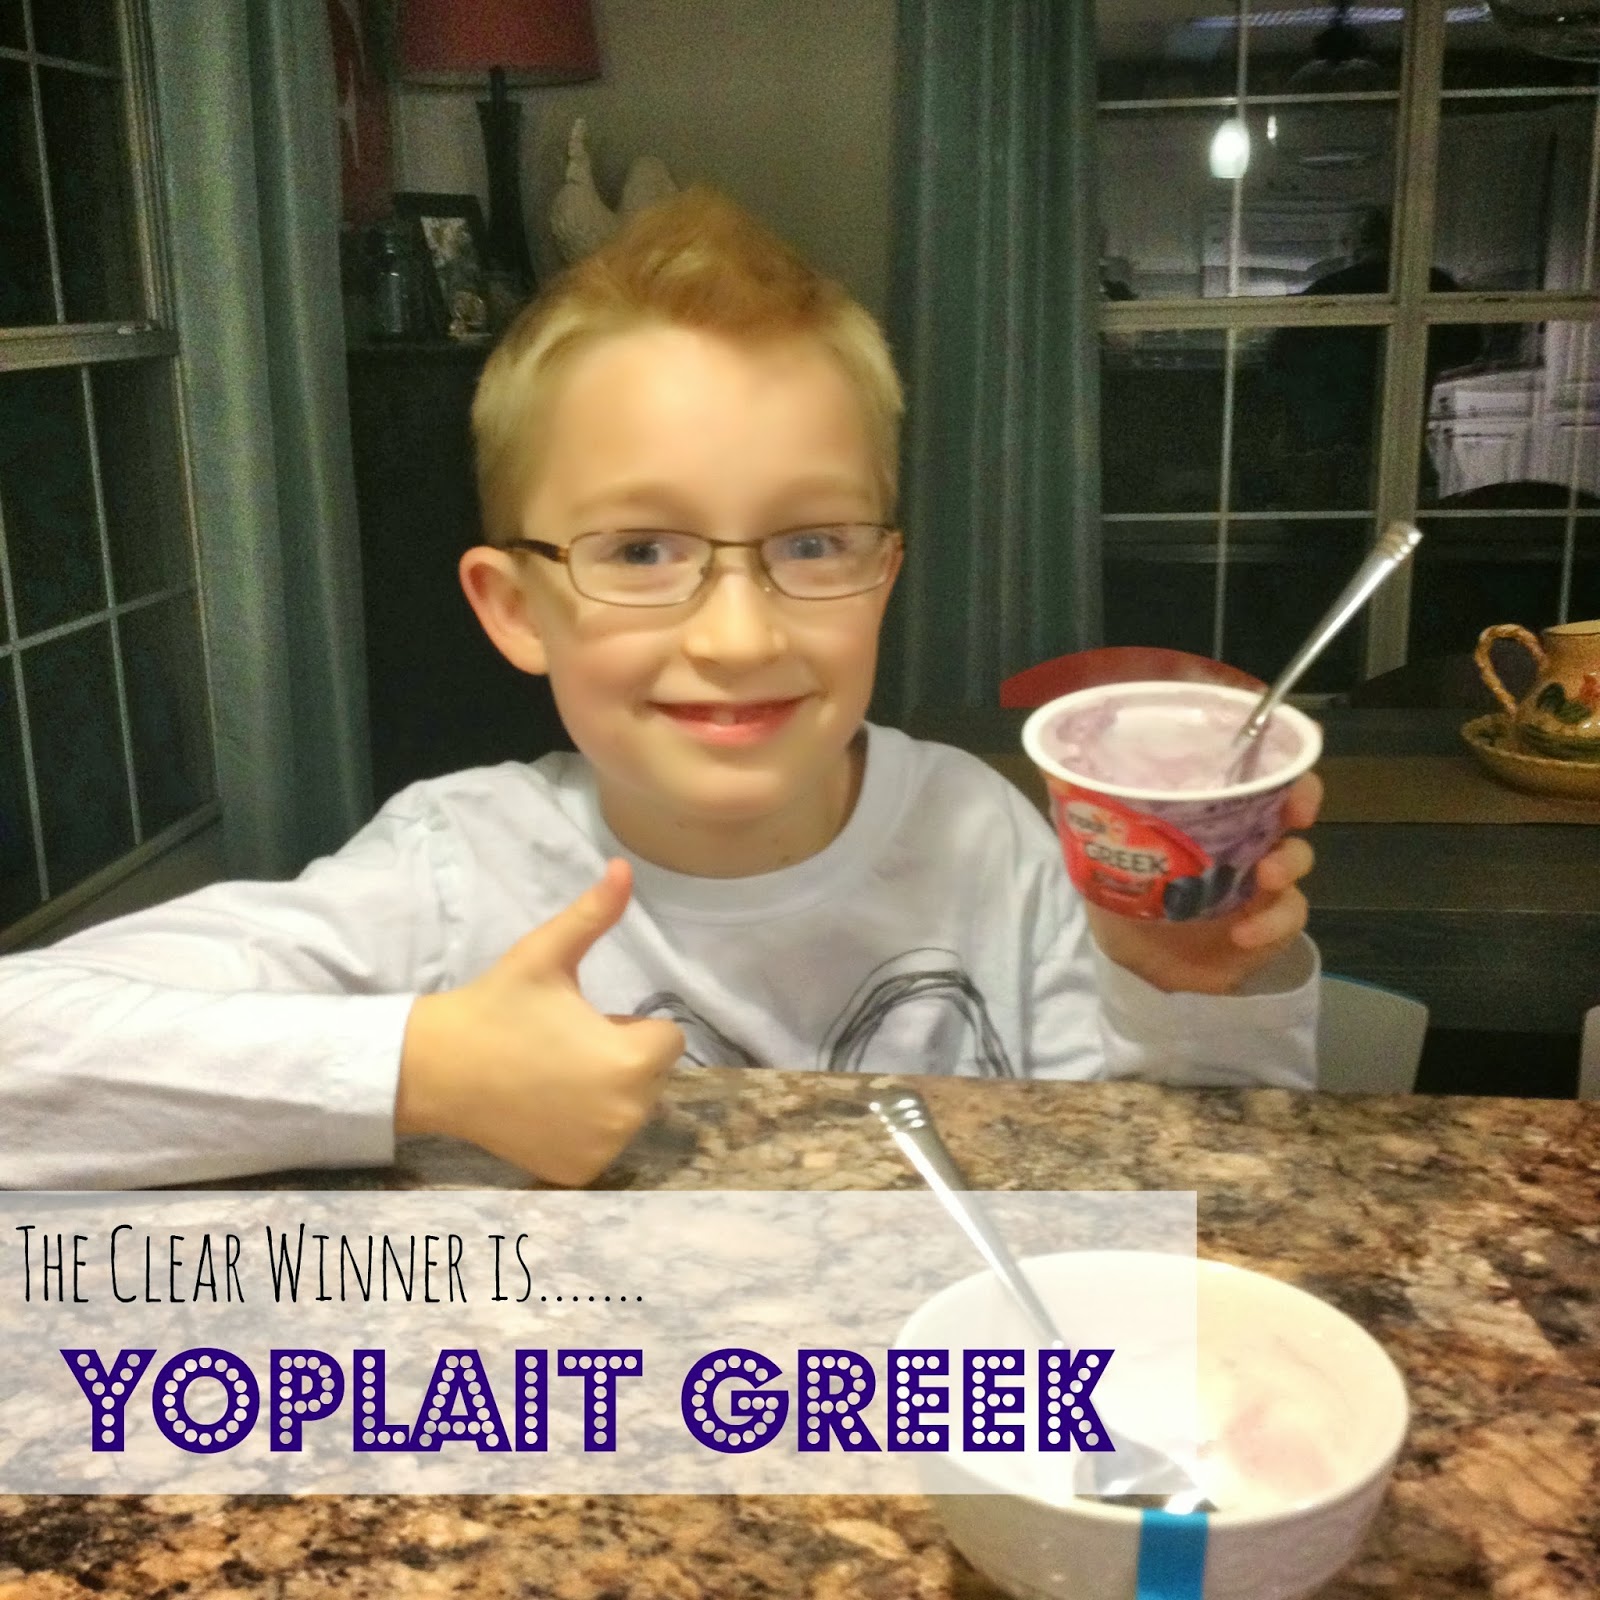 Yoplait Greek Taste-off #sponsored